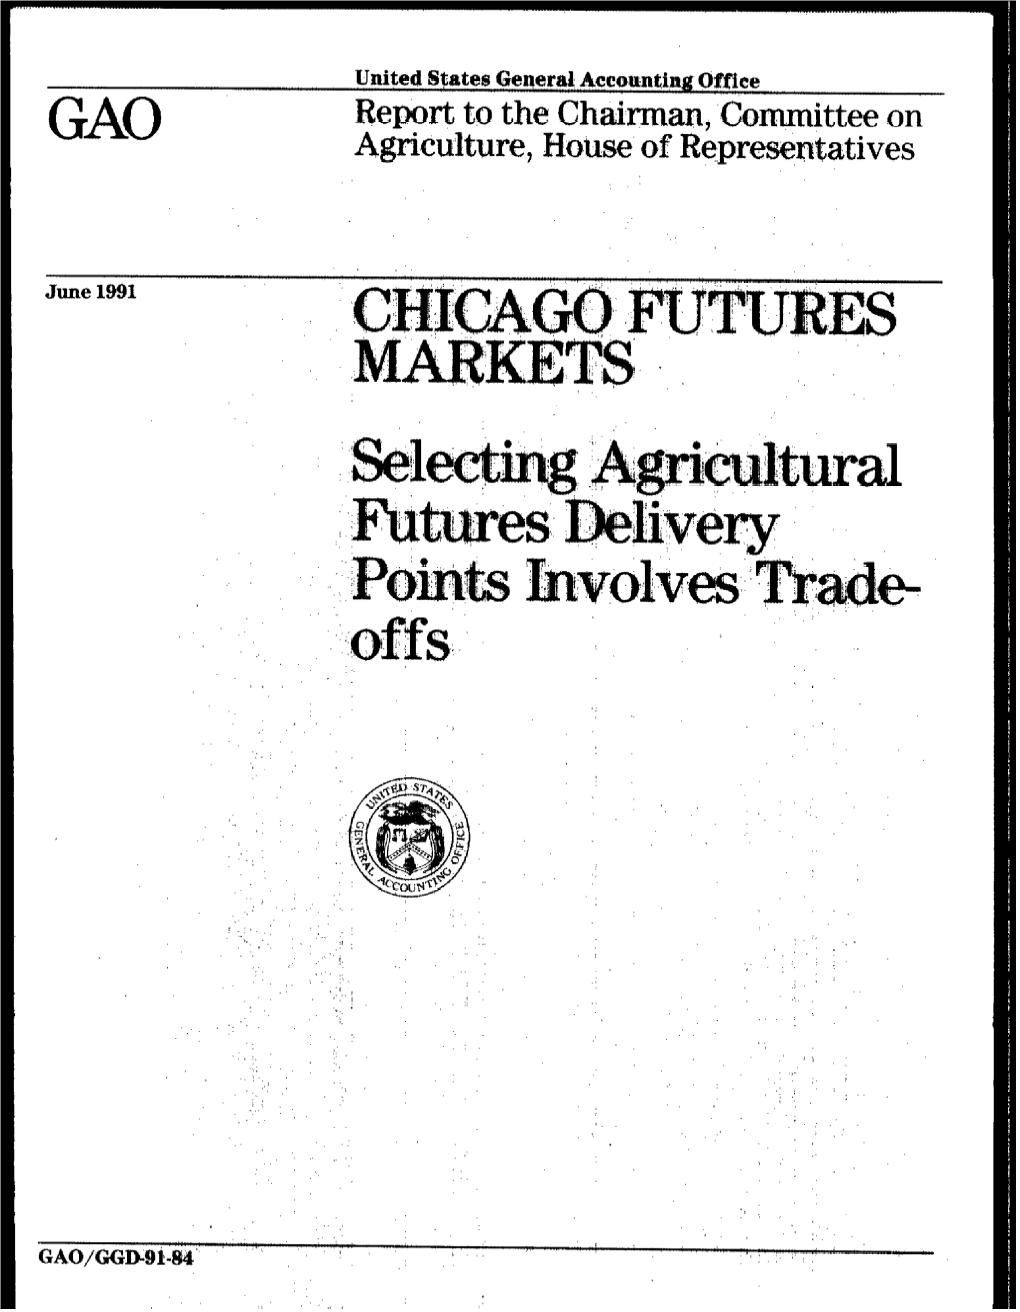 GGD-91-84 Chicago Futures Markets